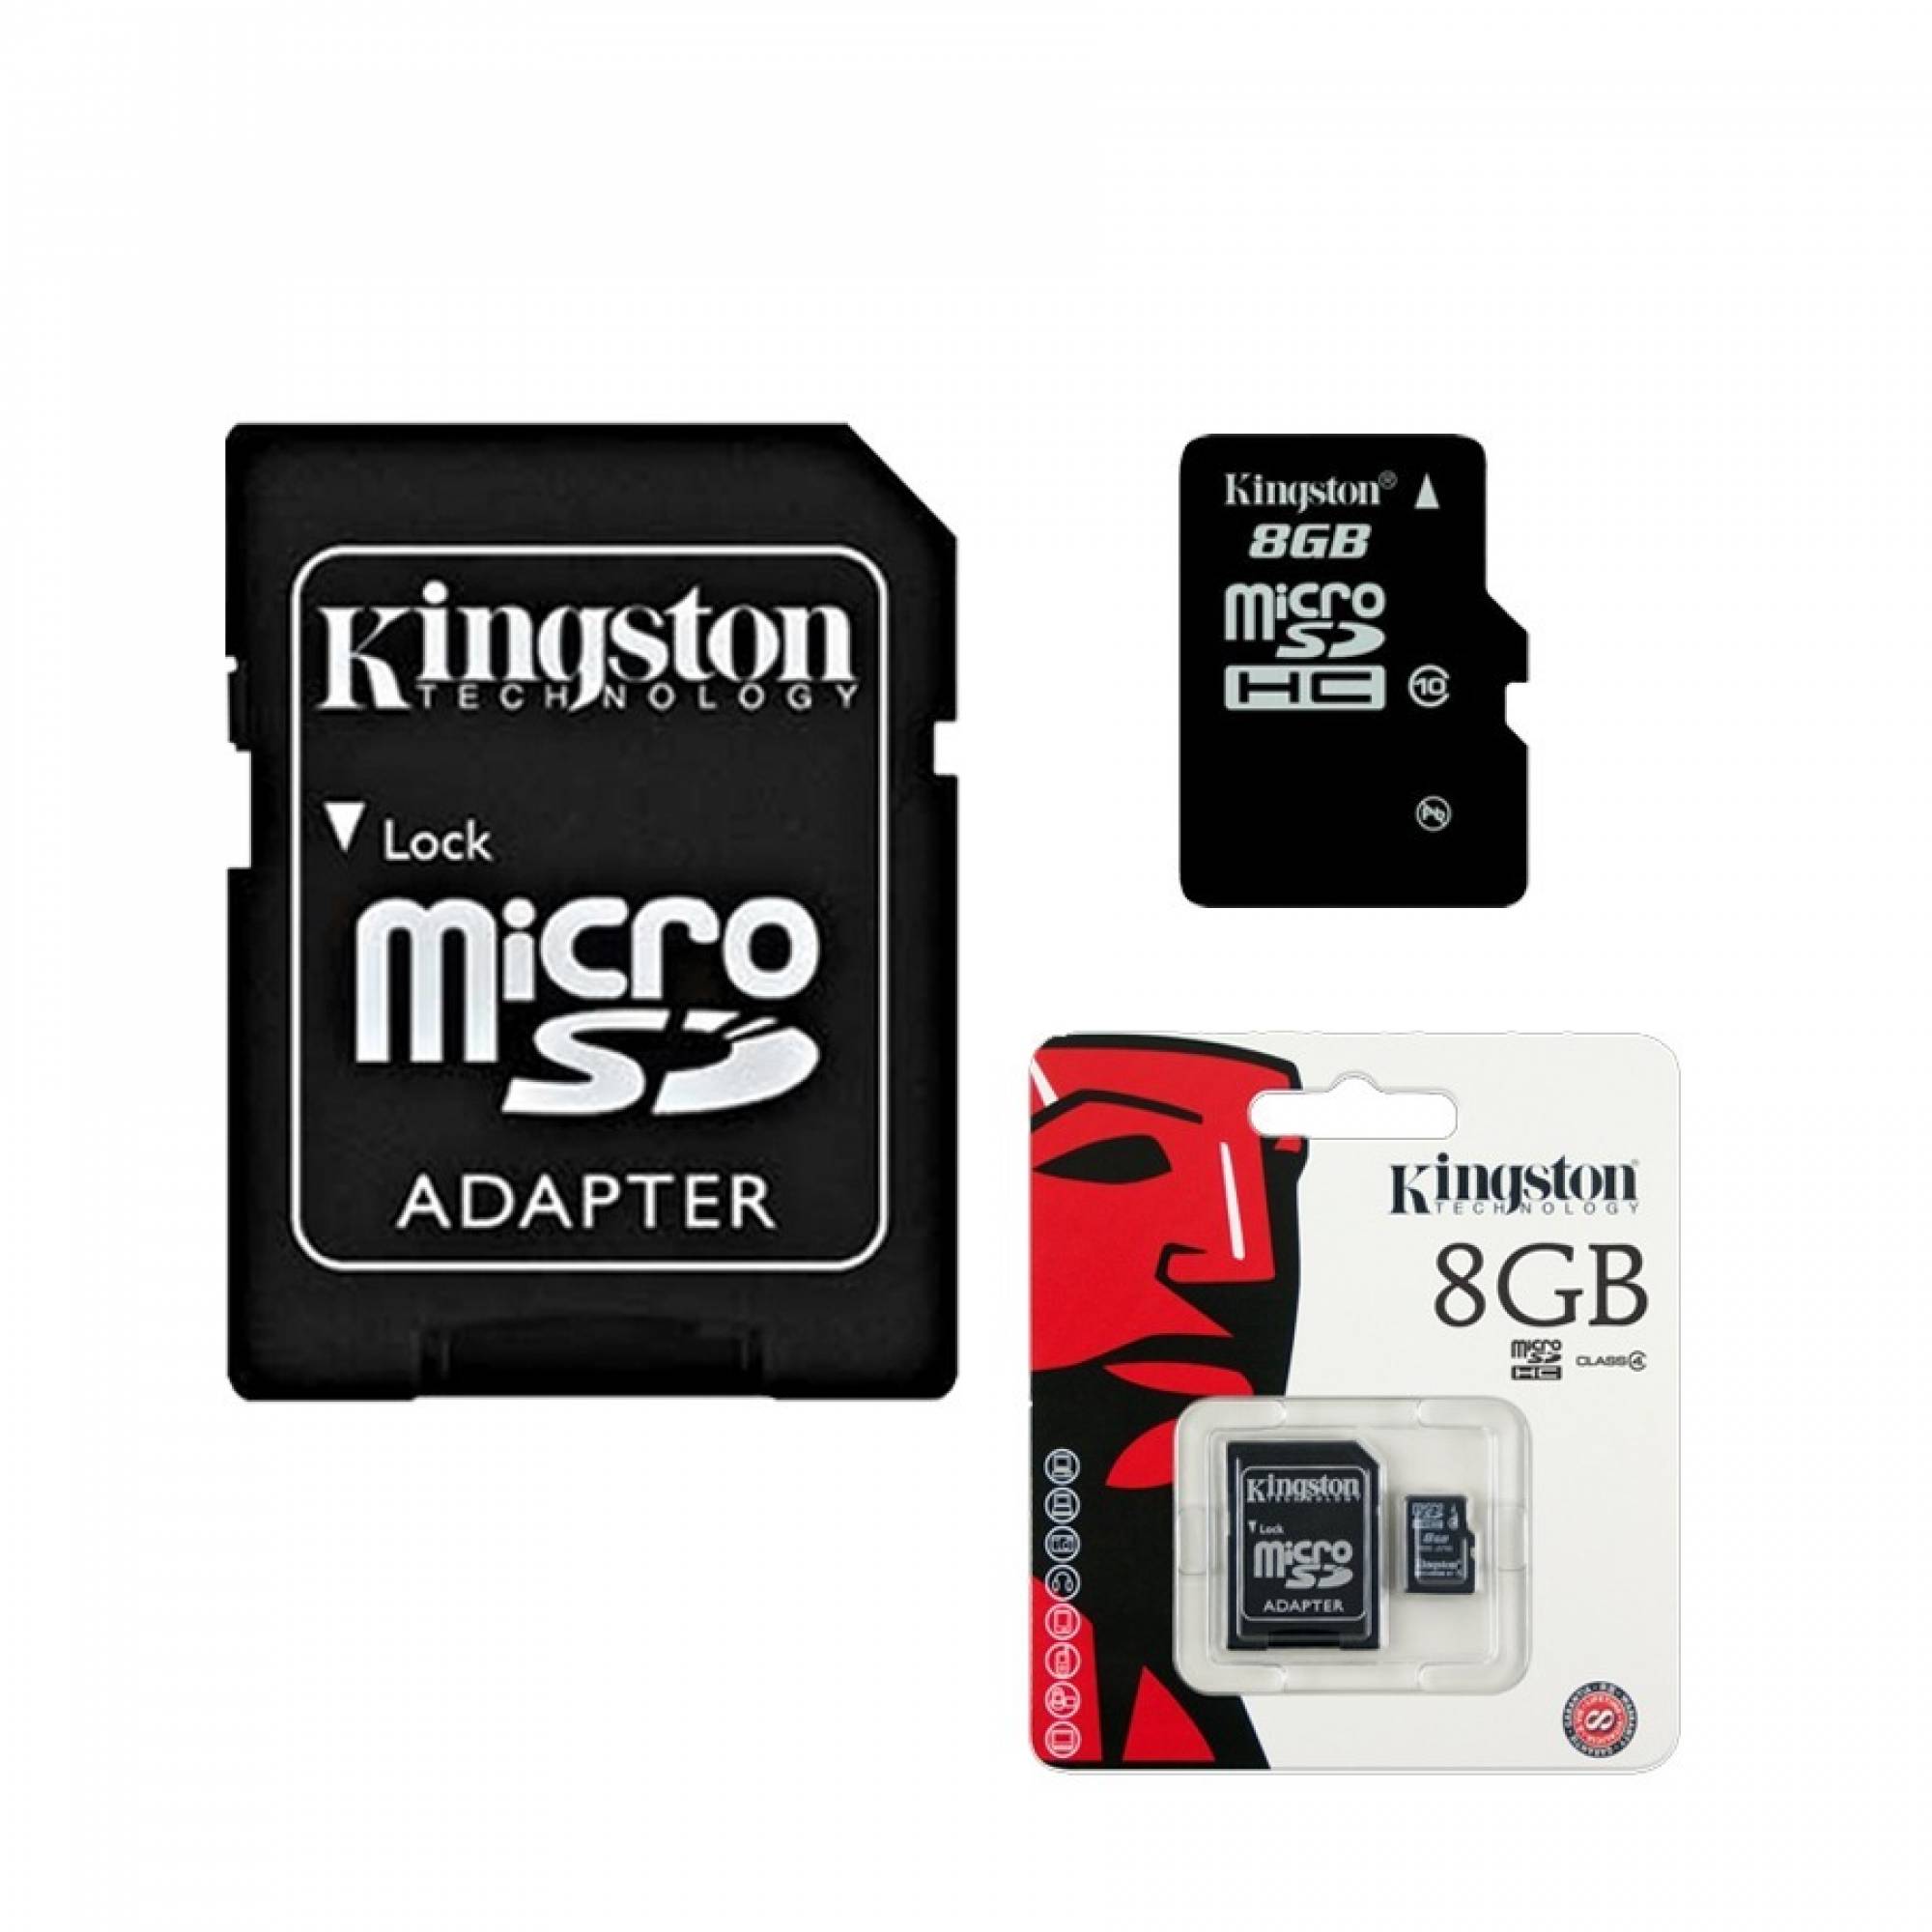 Адаптер microsdhc. Kingston MICROSD Adapter. Микро СД 8 ГБ. Адаптер микро СД на СД. MICROSD 8gb.